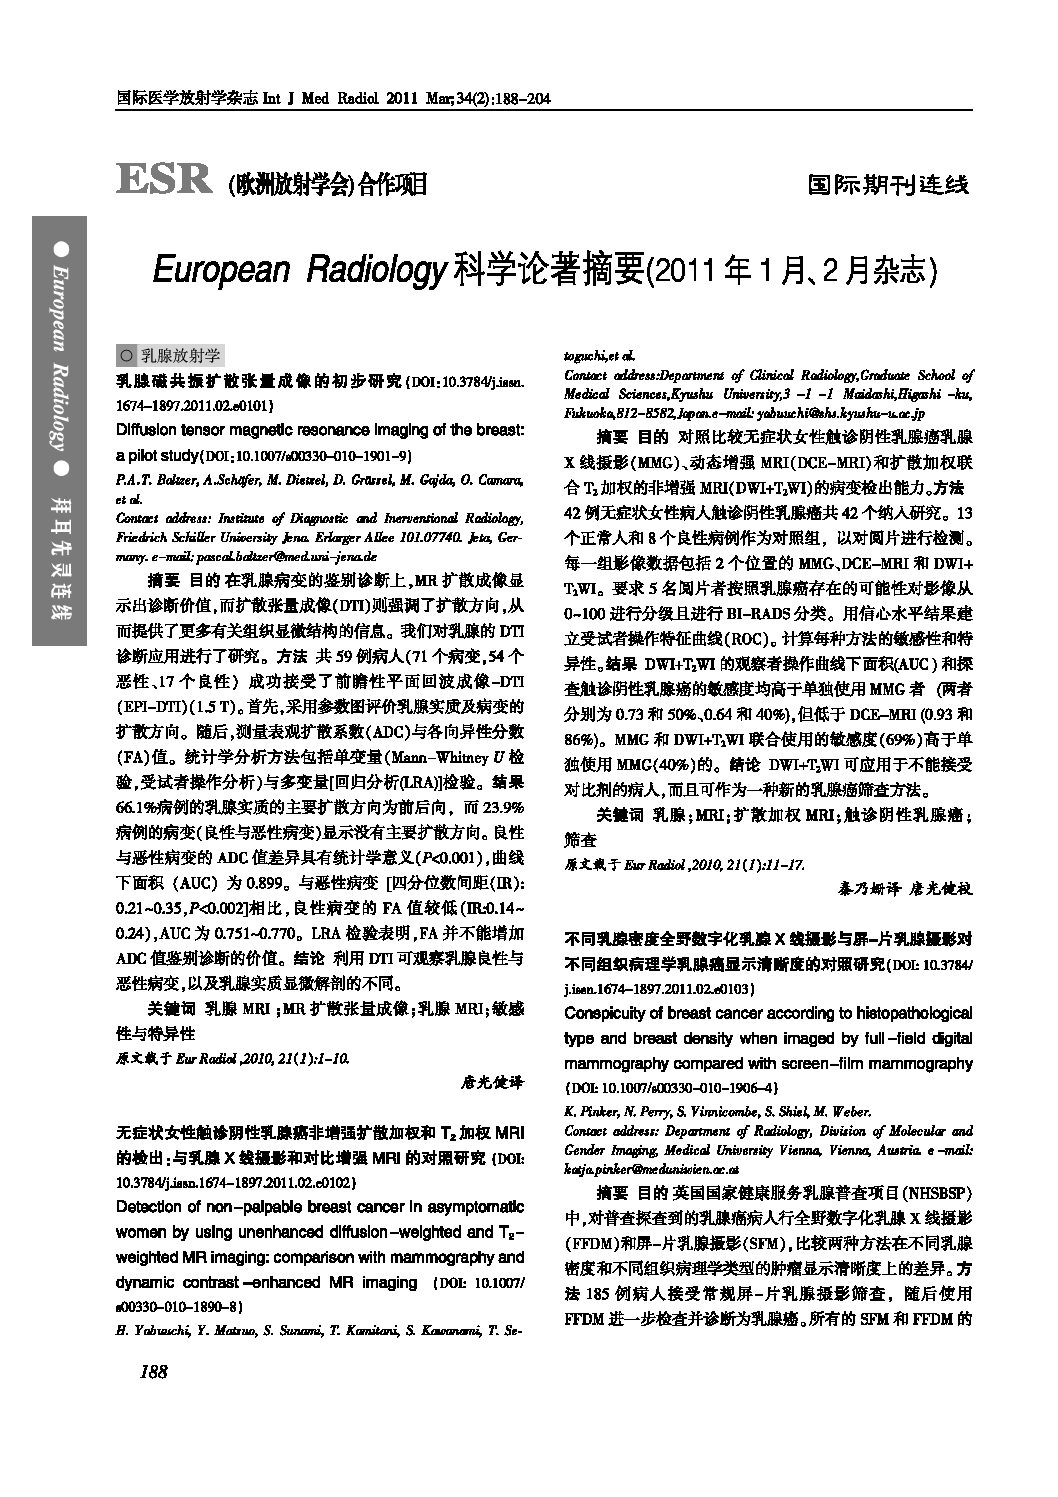 European Radiology Vol. 2011, January-February (20MB)